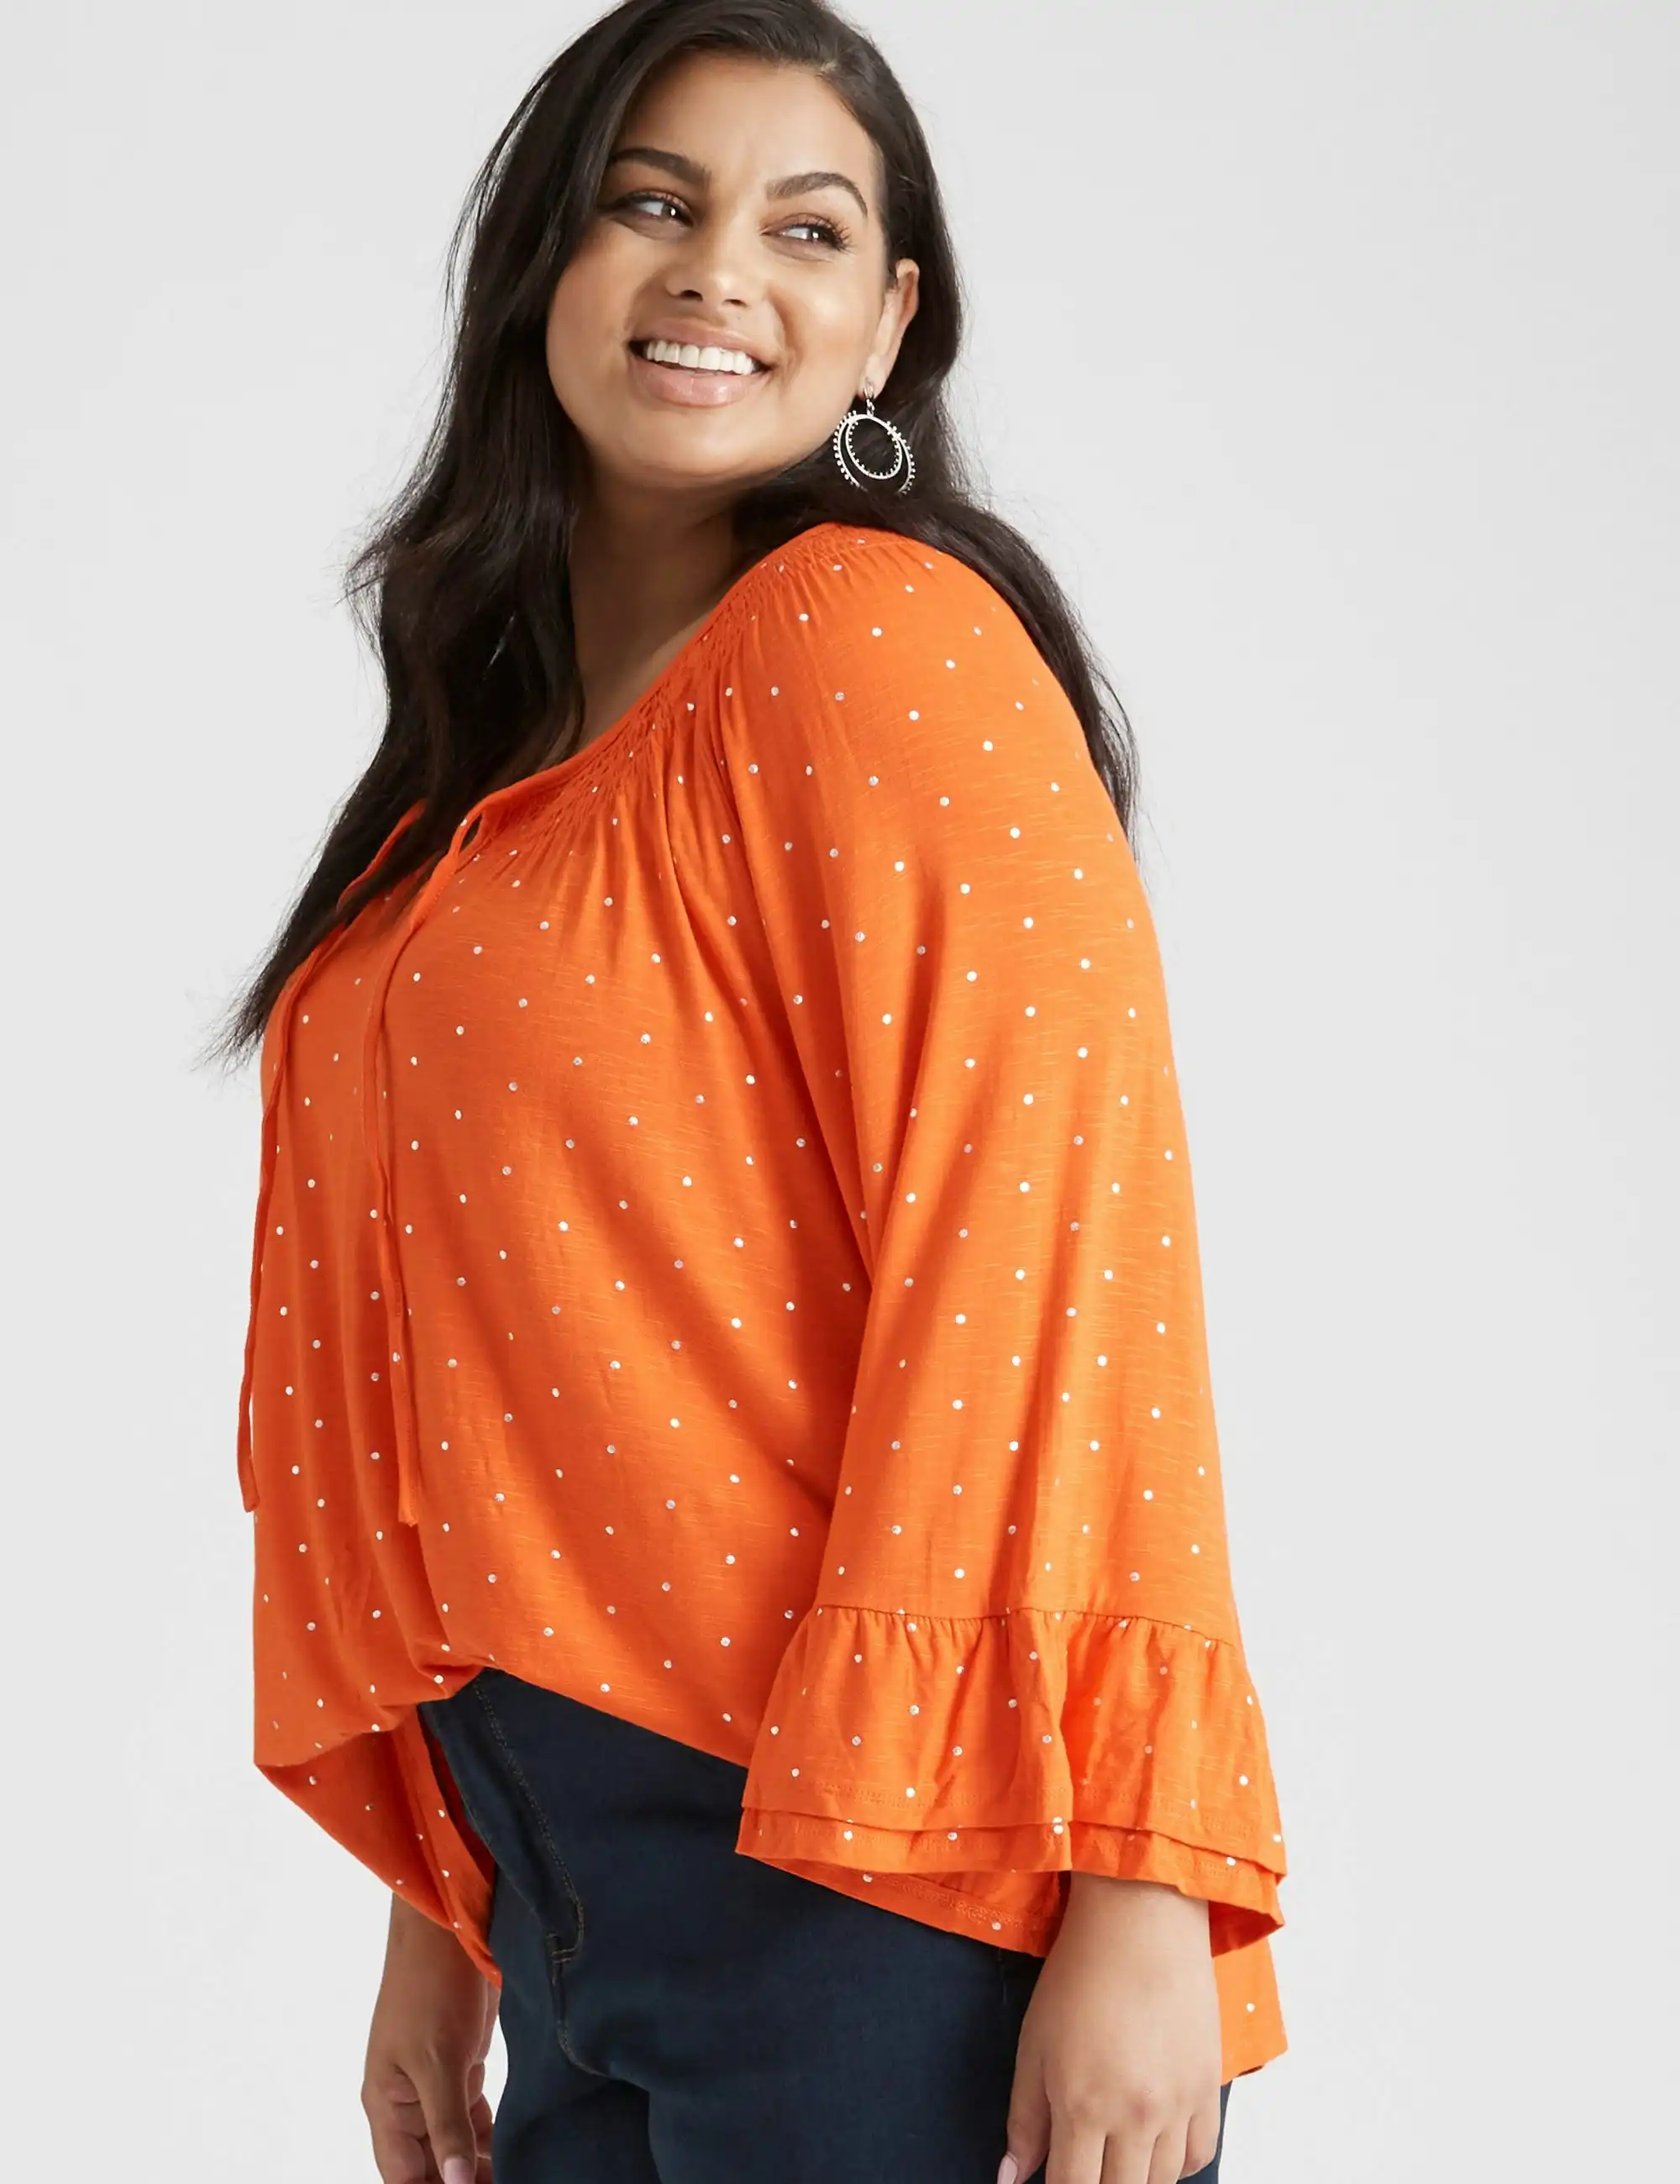 beme 3/4 Sleeve Print Knitwear Top (Tangerine)